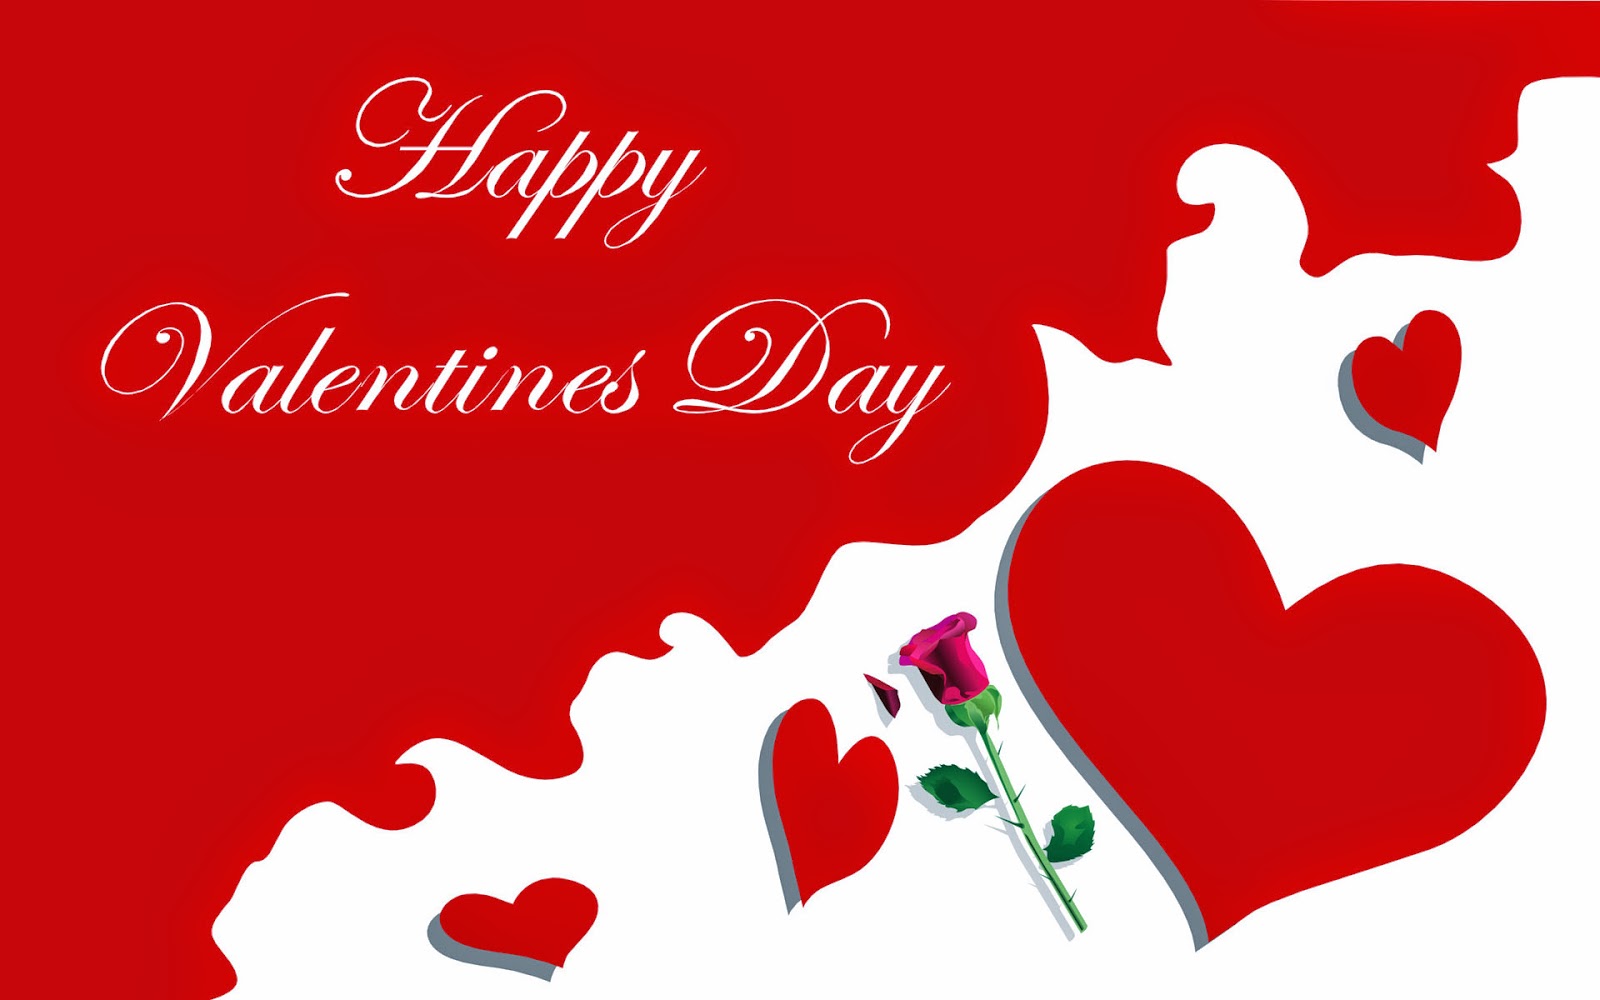 Love You Happy Valentine S Day Wallpaper Image